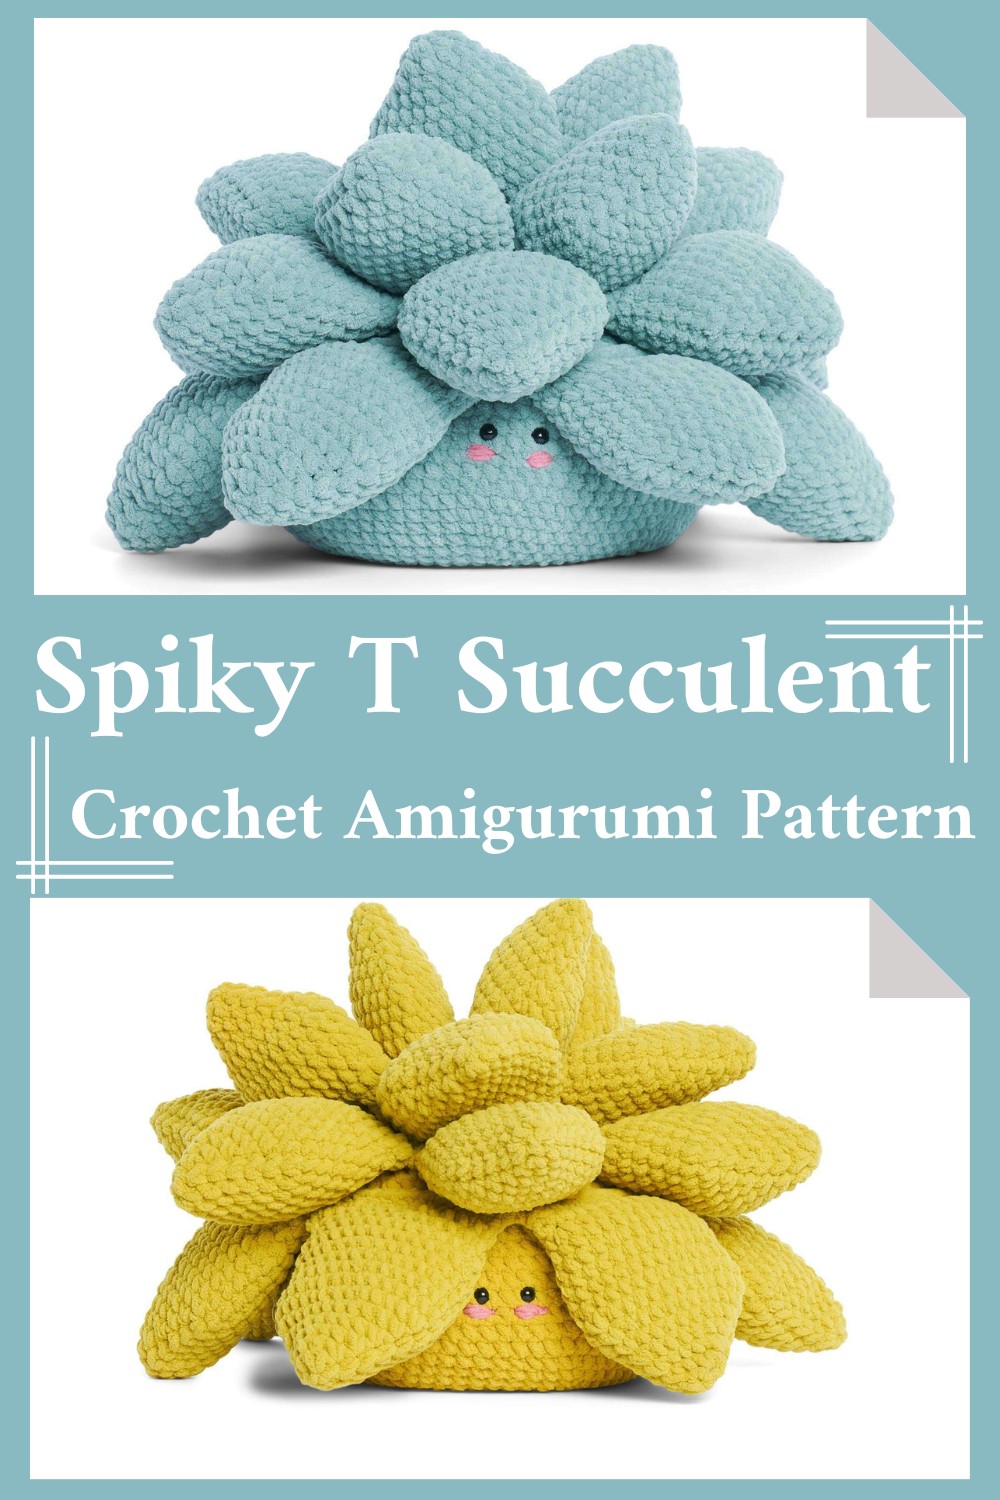 Spiky T Succulent Crochet Amigurumi Pattern